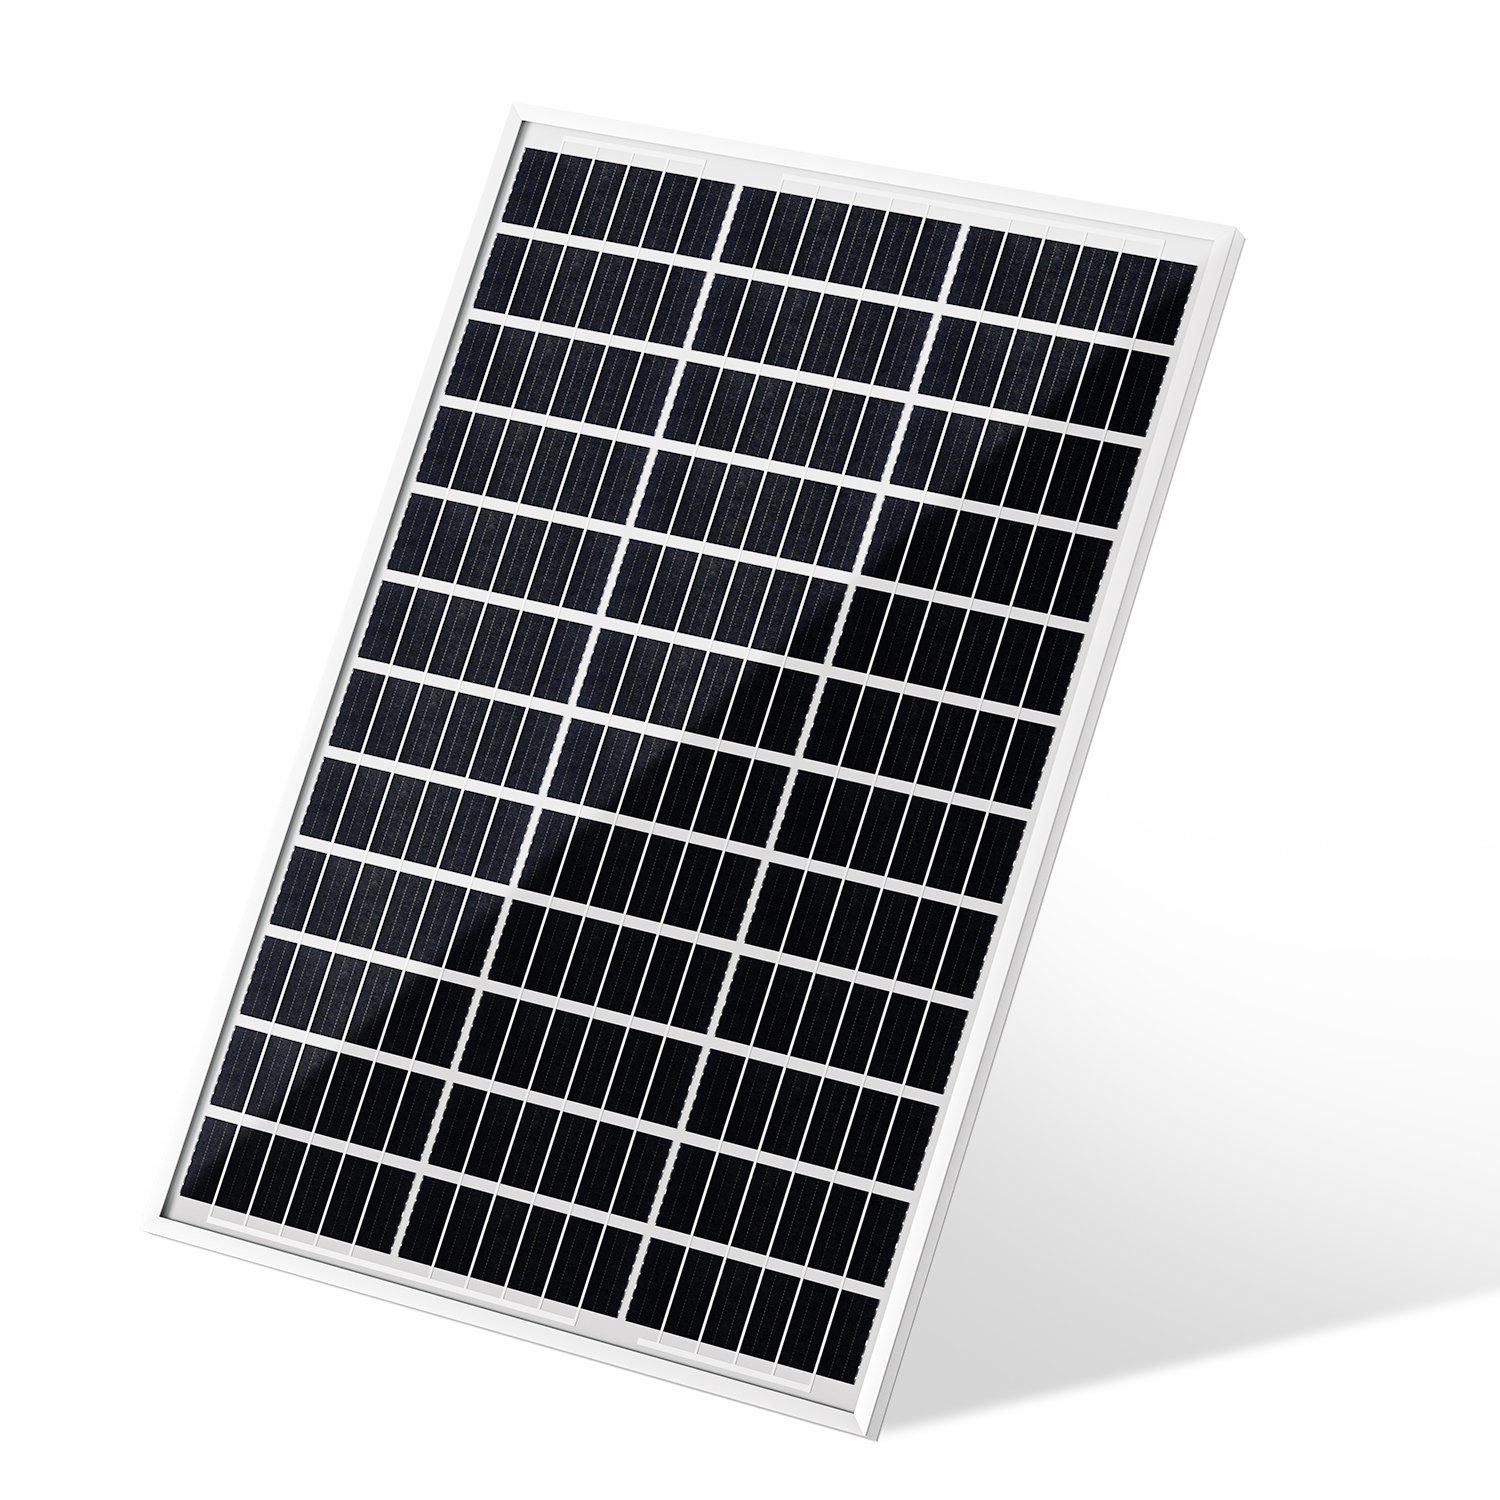 Gimisgu Solaranlage Solaranlage 100W Solarpanel 12V, Solarpanel Solarladegerät, 100 W